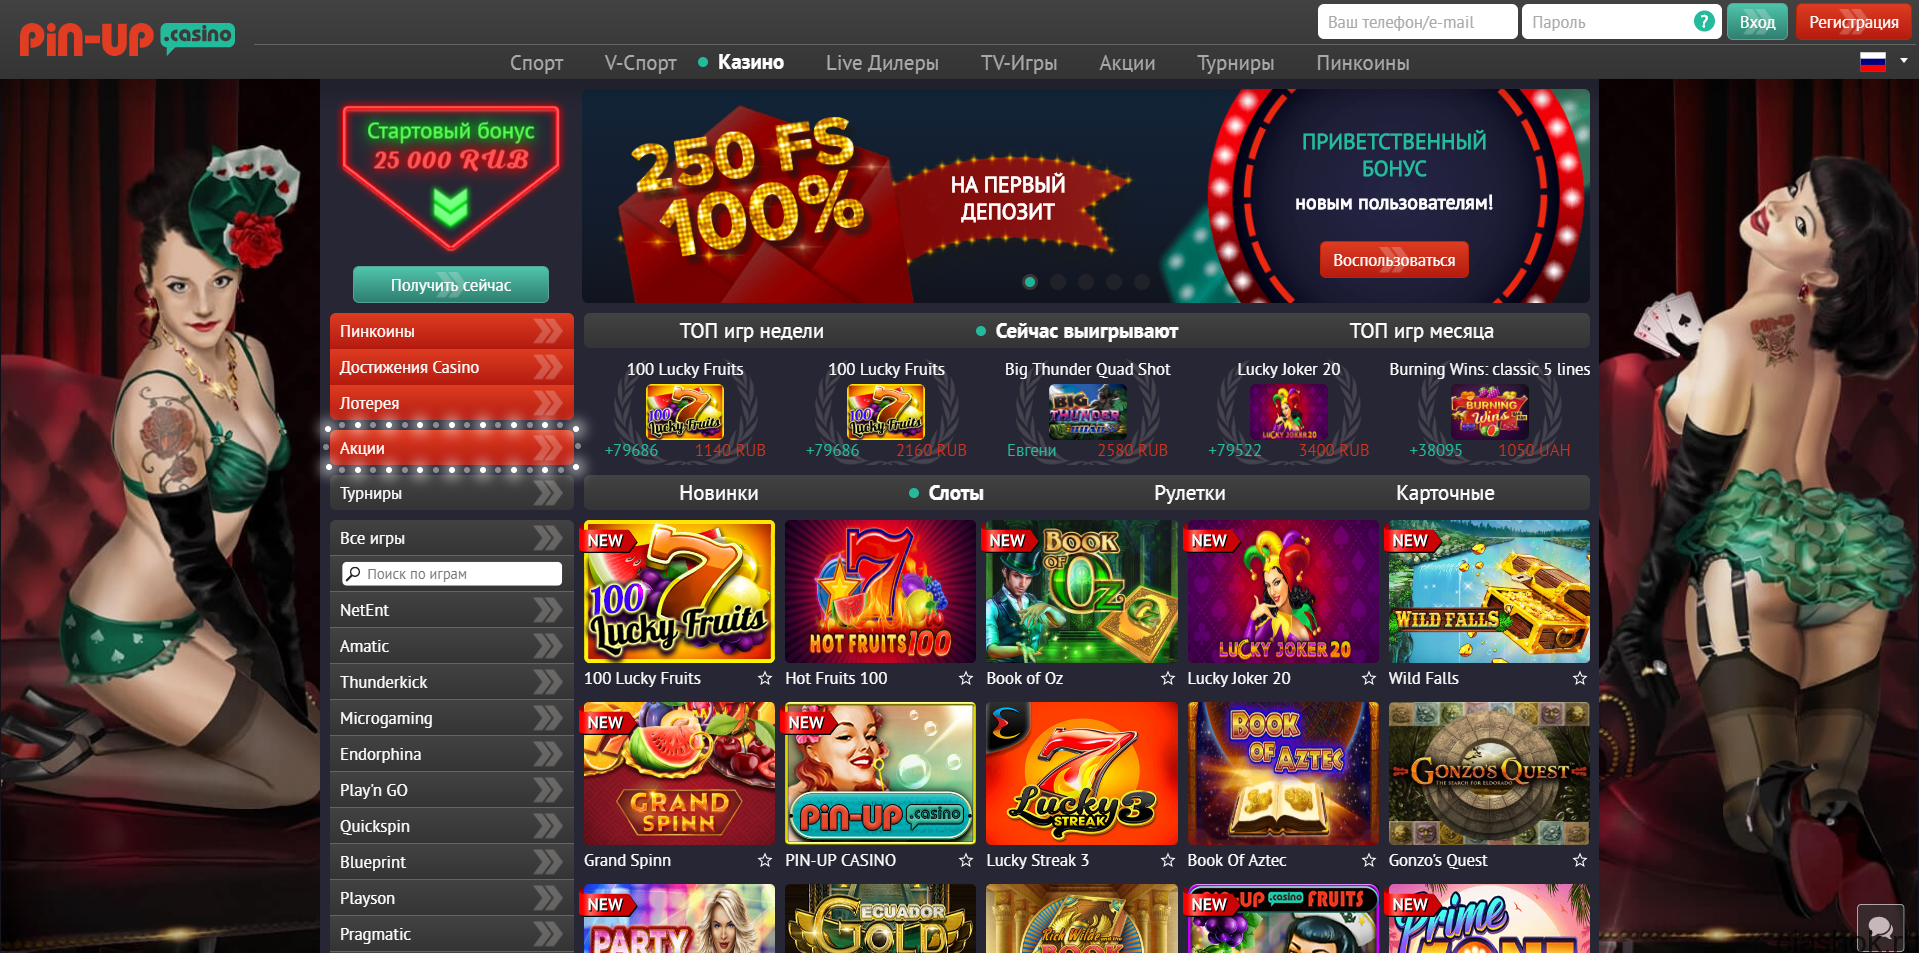 Pin up pro casino com netent игровые автоматы бесплатно покердом промокод poker win